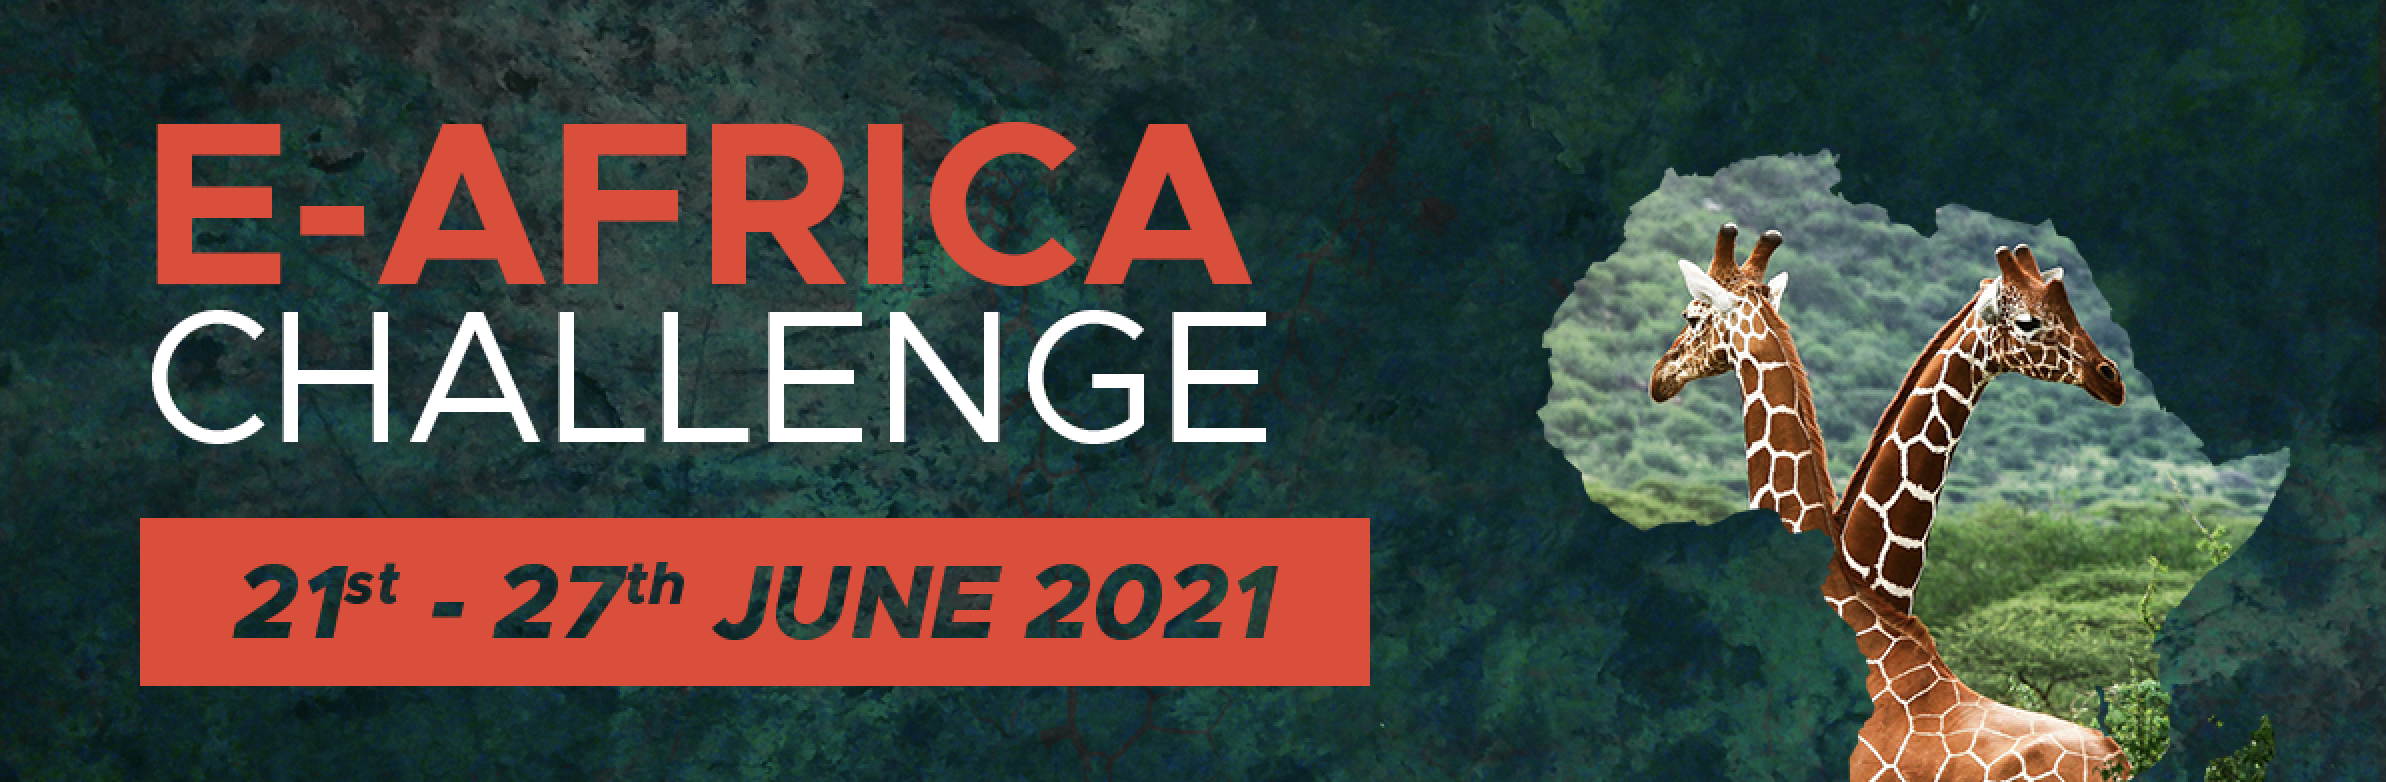 E - Africa Challenge and Jiwe Studio Image